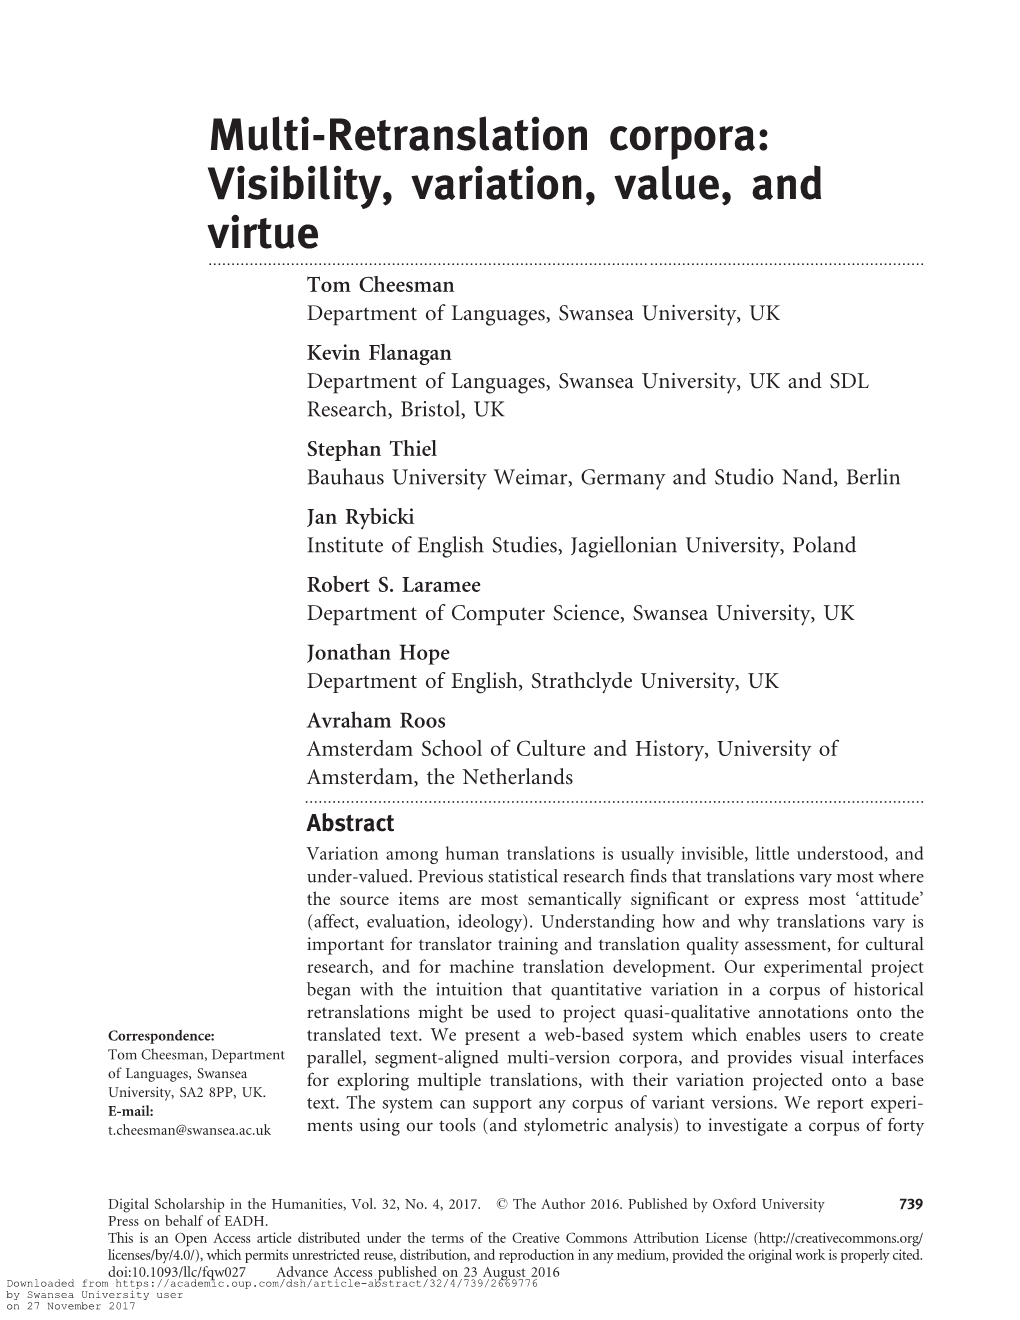 Multi-Retranslation Corpora: Visibility, Variation, Value, and Virtue